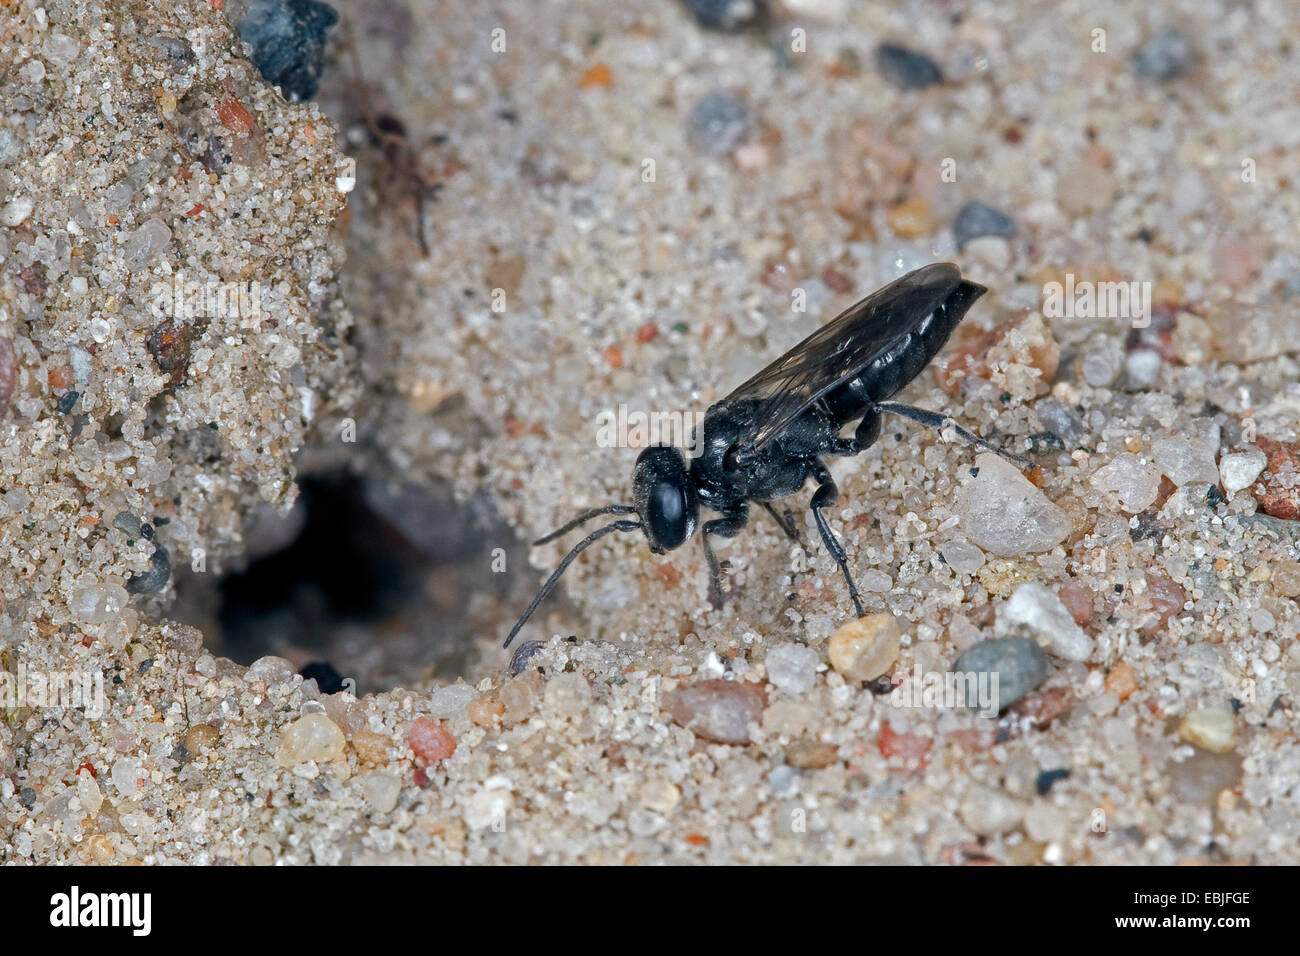 Digger wasp (Tachysphex, spéc.), creuser den, Allemagne Banque D'Images